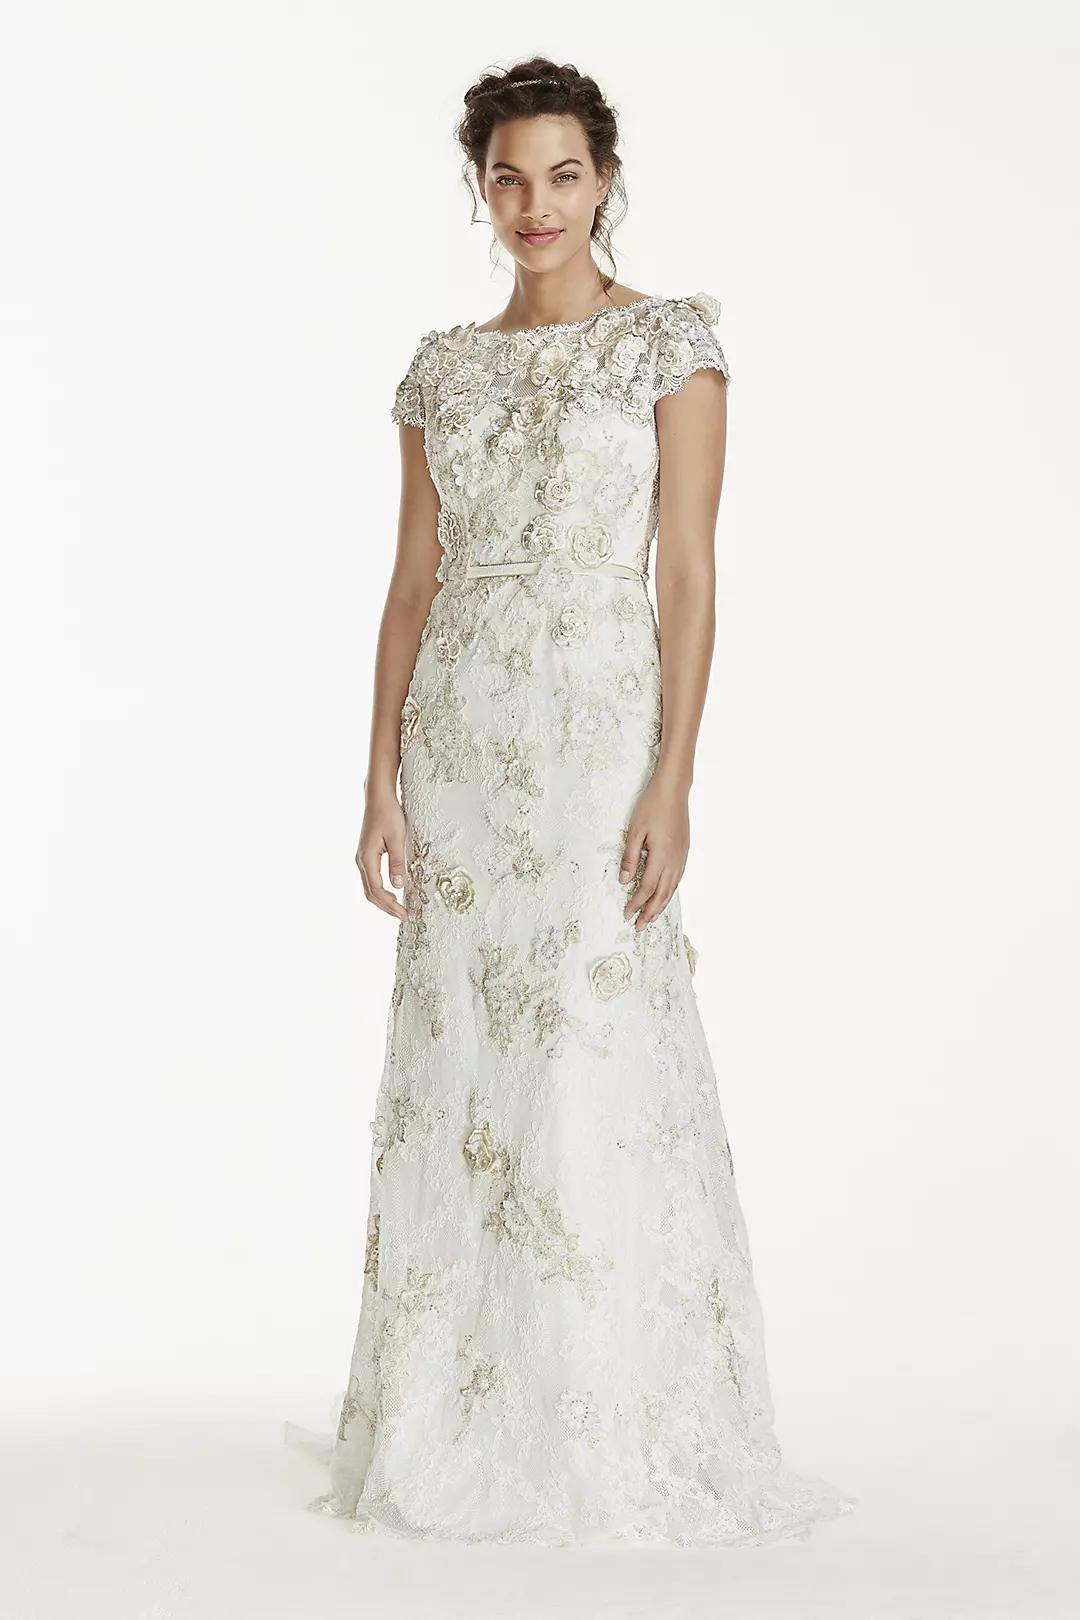 Melissa Sweet 3D Cap Sleeve Wedding Dress Image